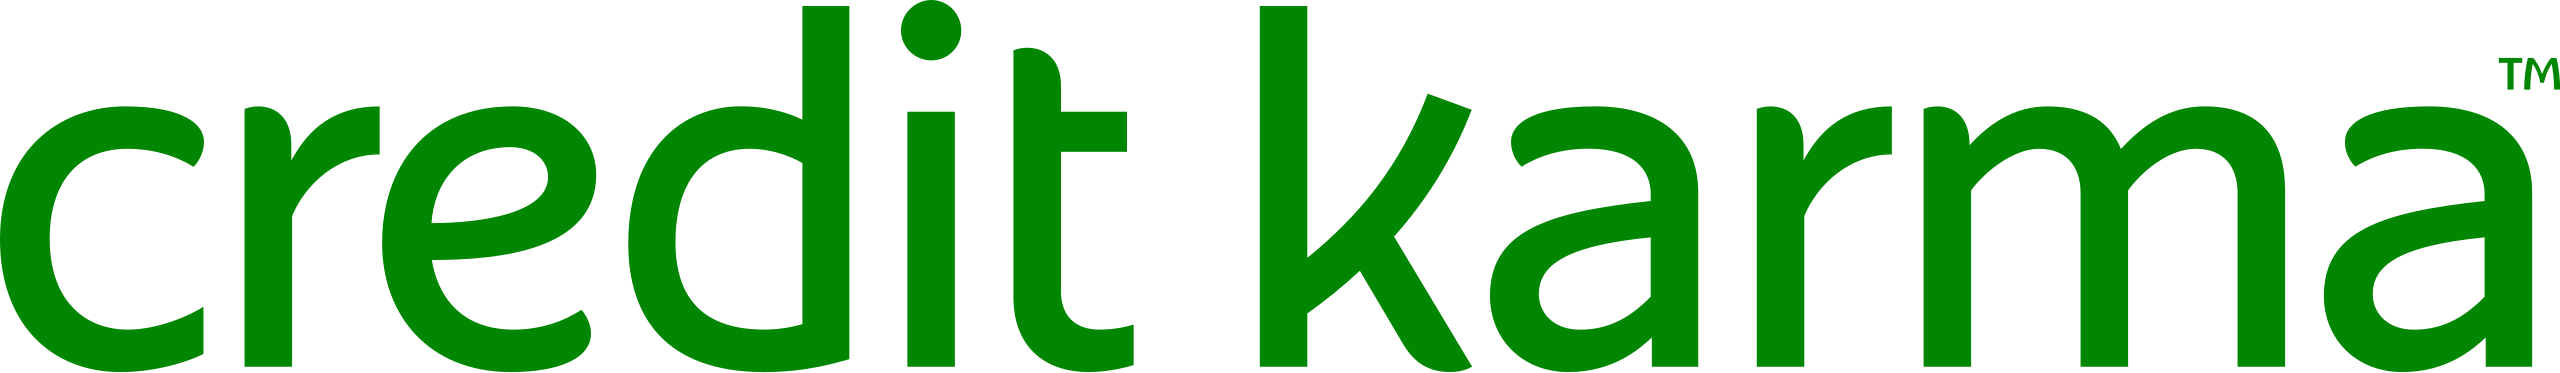 Credit Karma logo